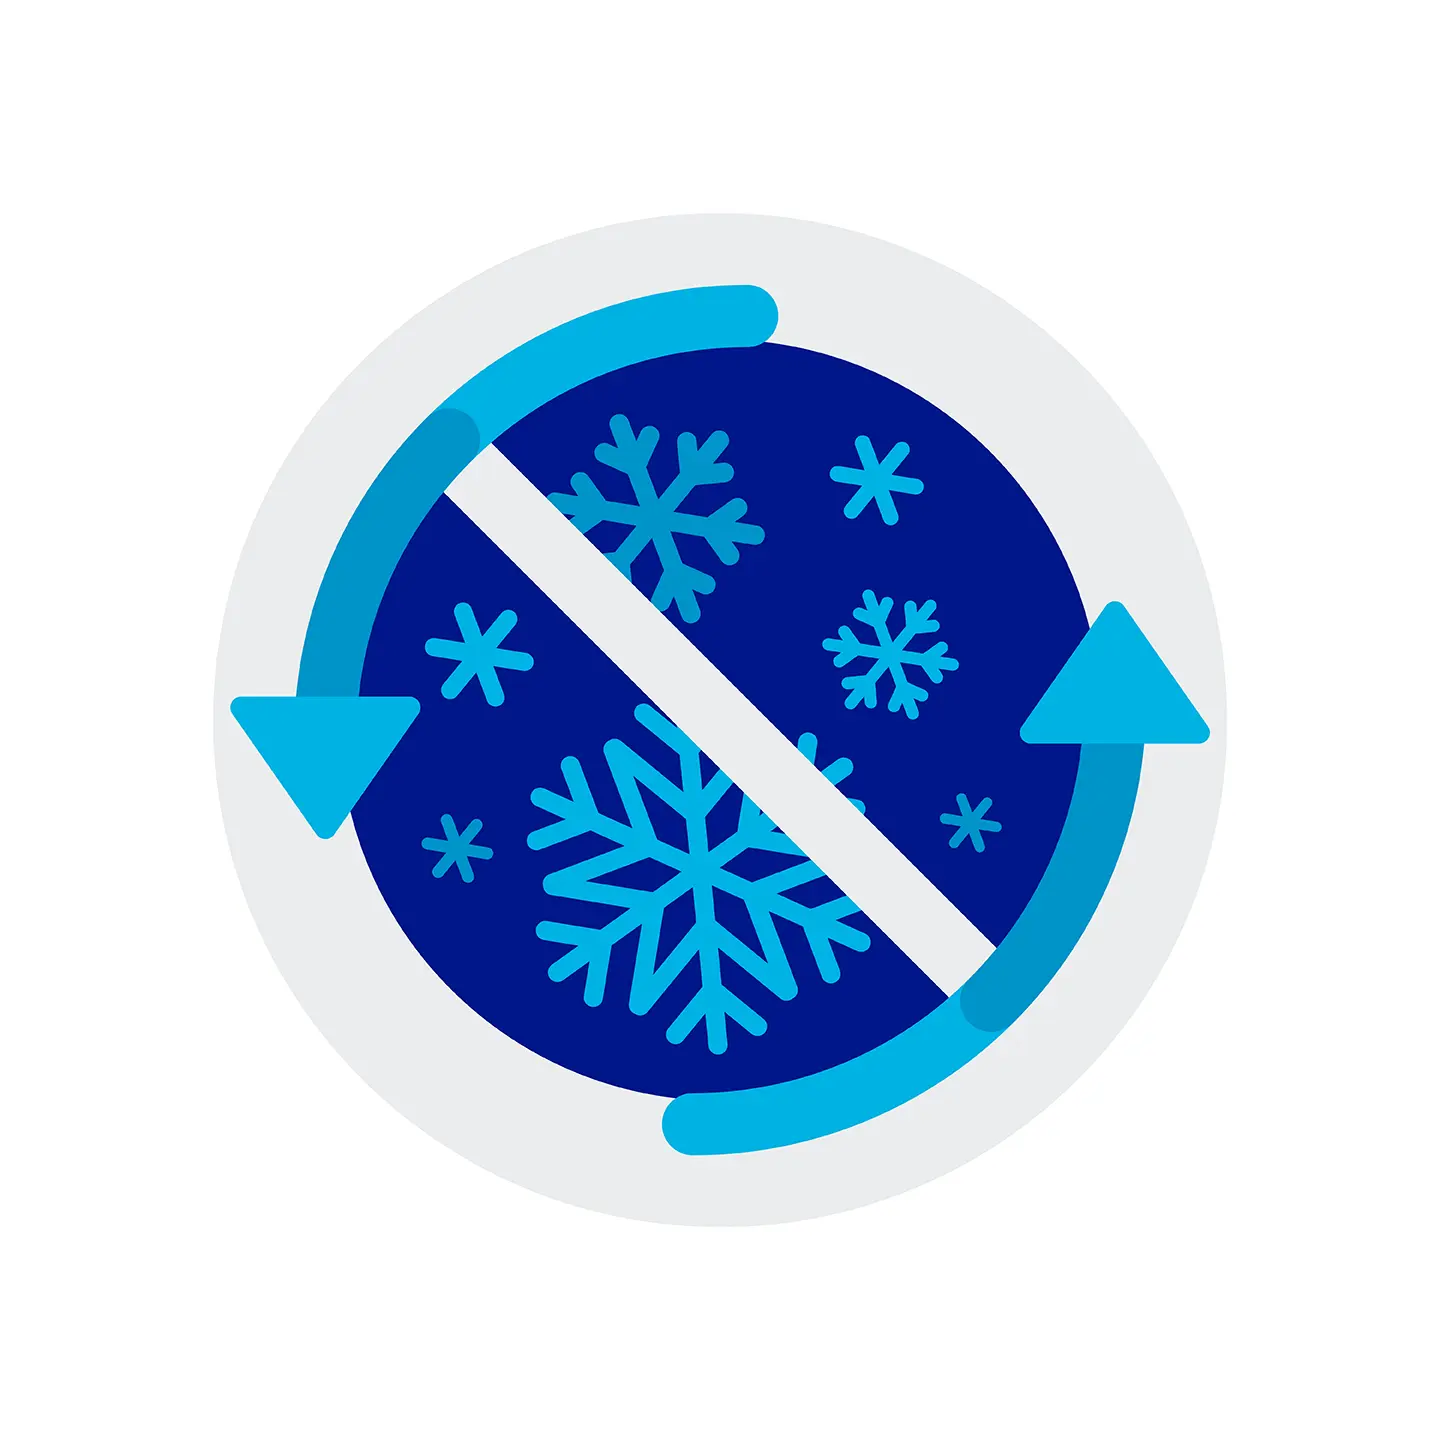 Snowflake icon with "no" symbol